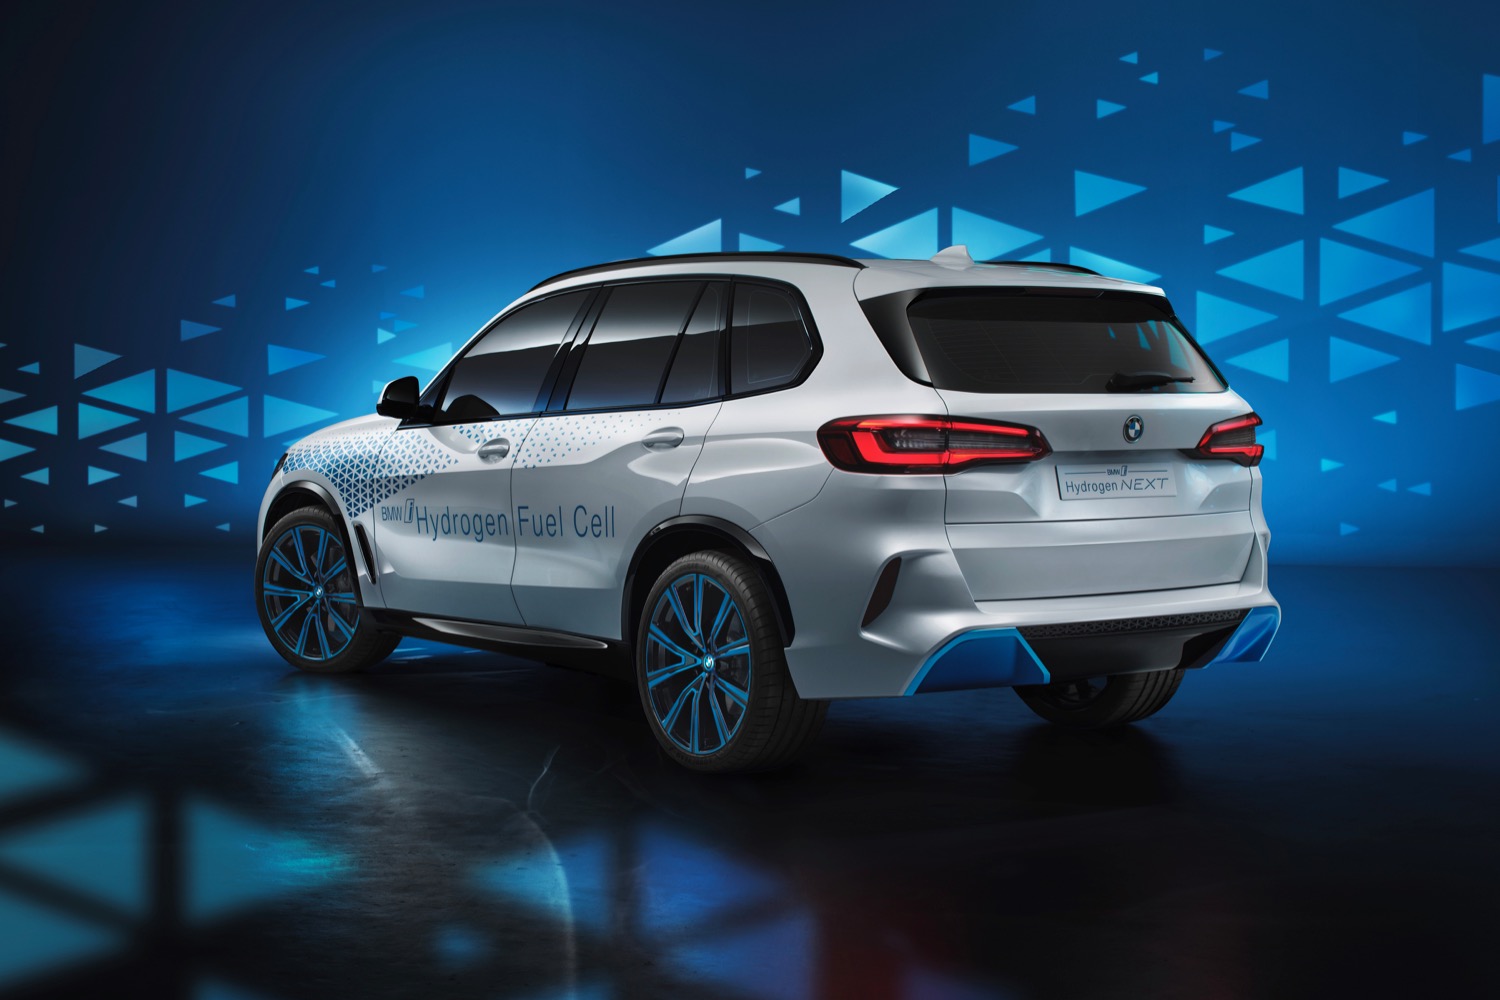 bmw i hydrogen next concept fuel cell vehicle 2019 frankfurt motor show